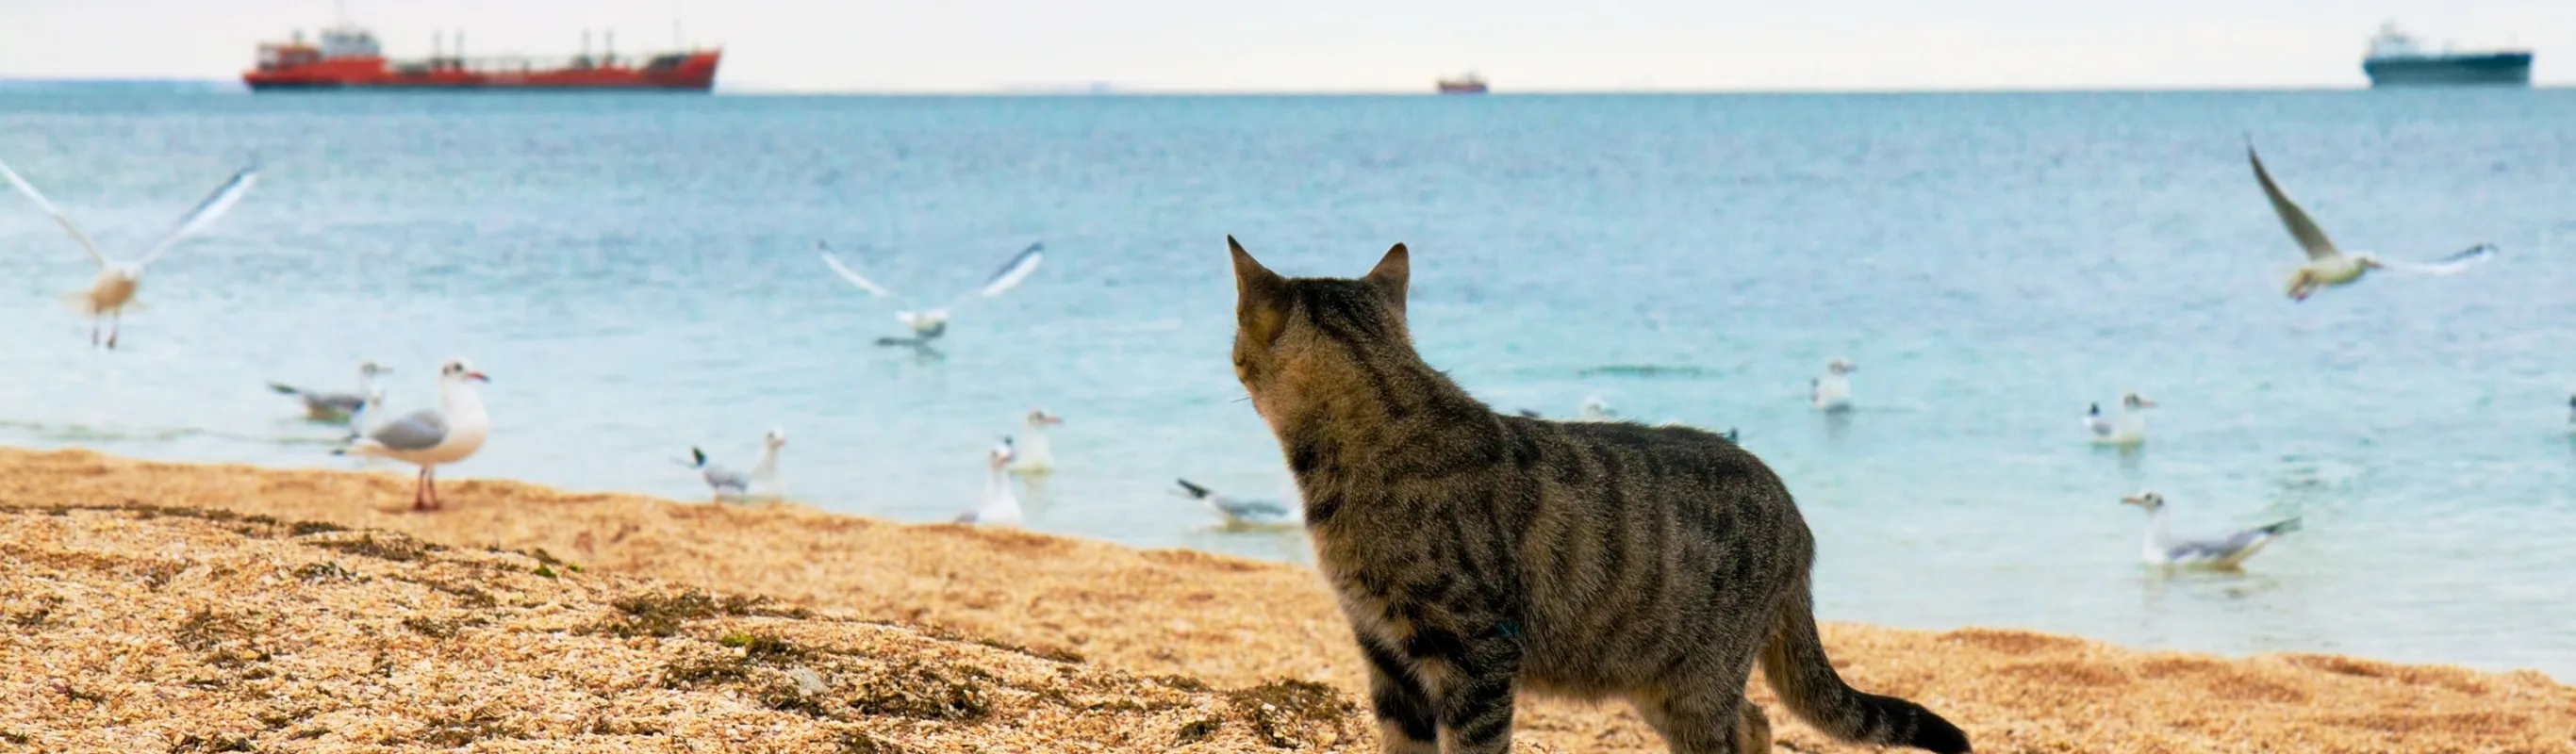 cat on beach looking into ocean